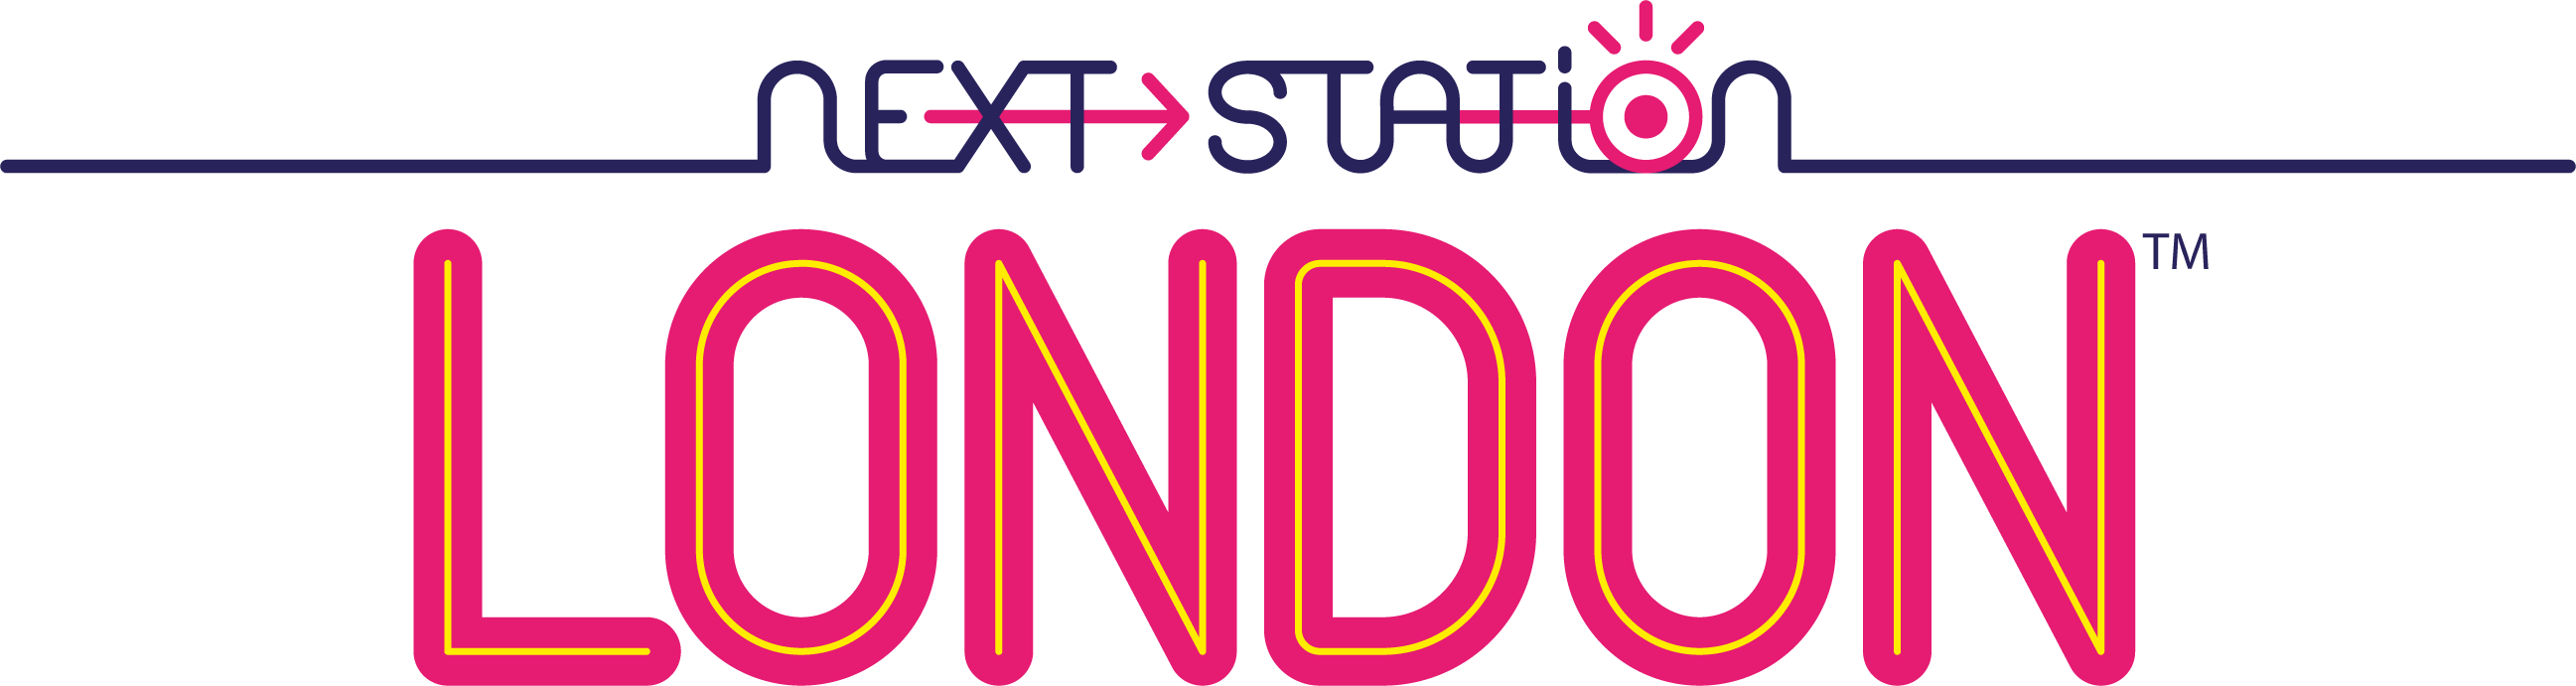 Logo Next Station London